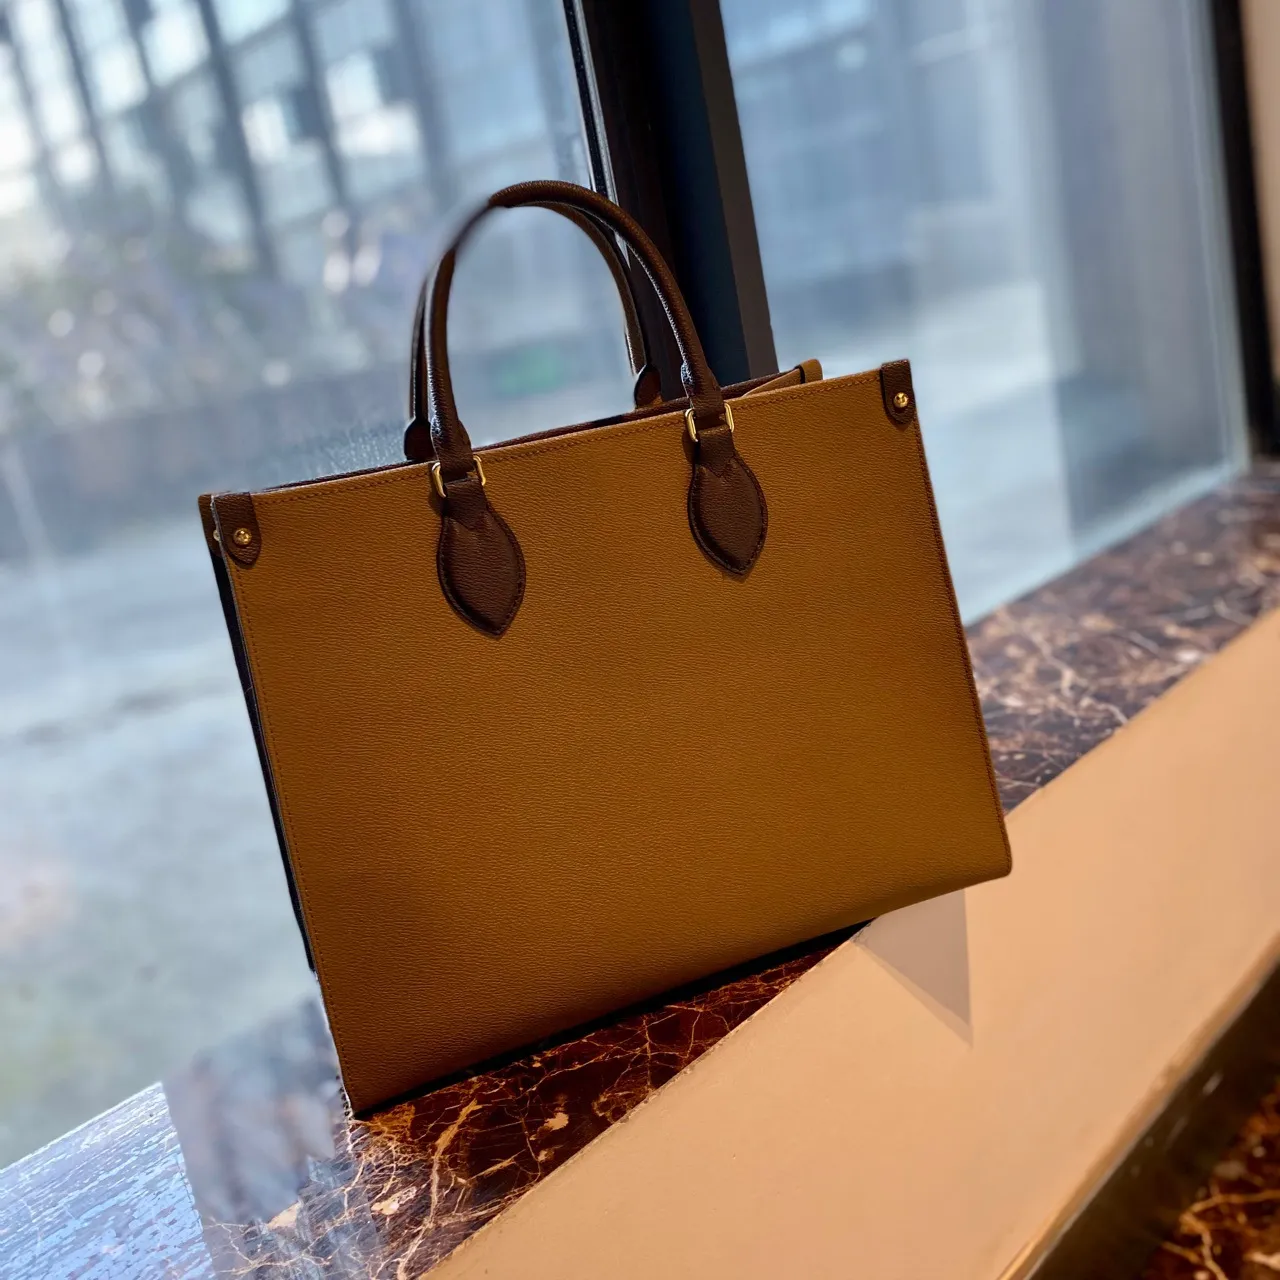 AAA M45321 mode onthego designer sac louiseitys luxe sac à bandoulière sacs fourre-tout pour femme sacs à main noir/beige dîner sac designer sac à main grande capacité sac à main